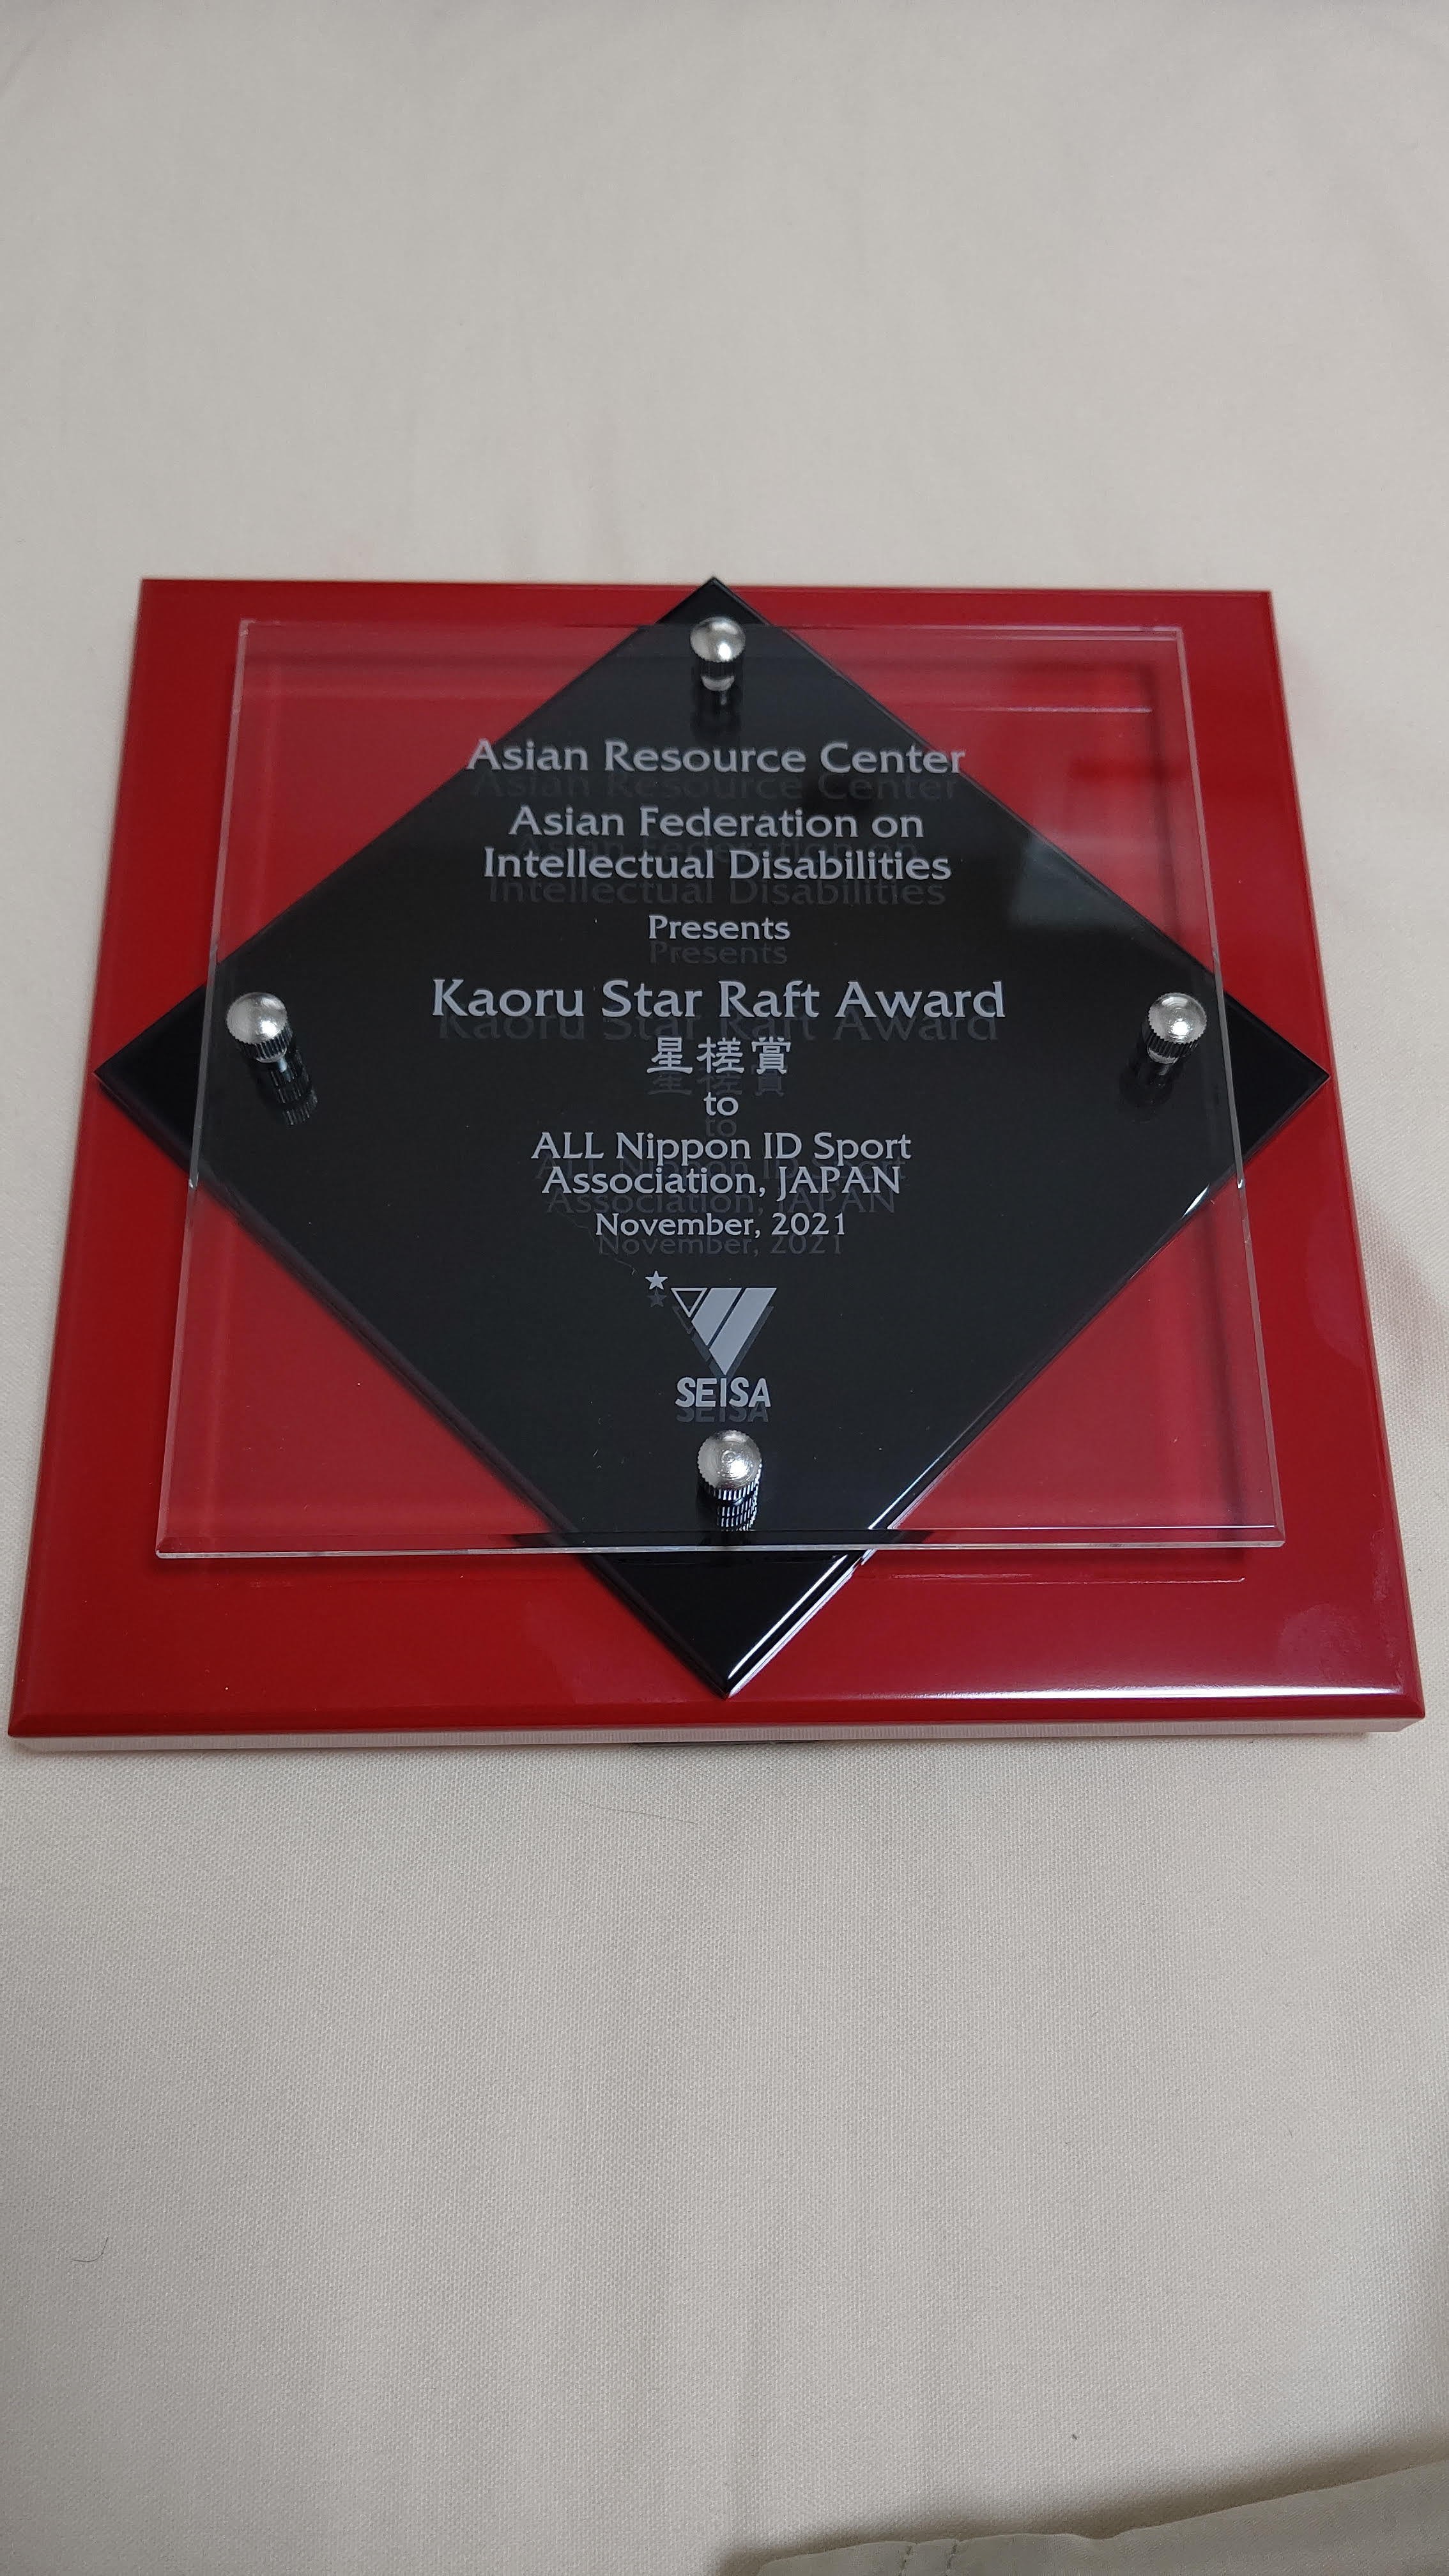 Kaoru Star Raft Award